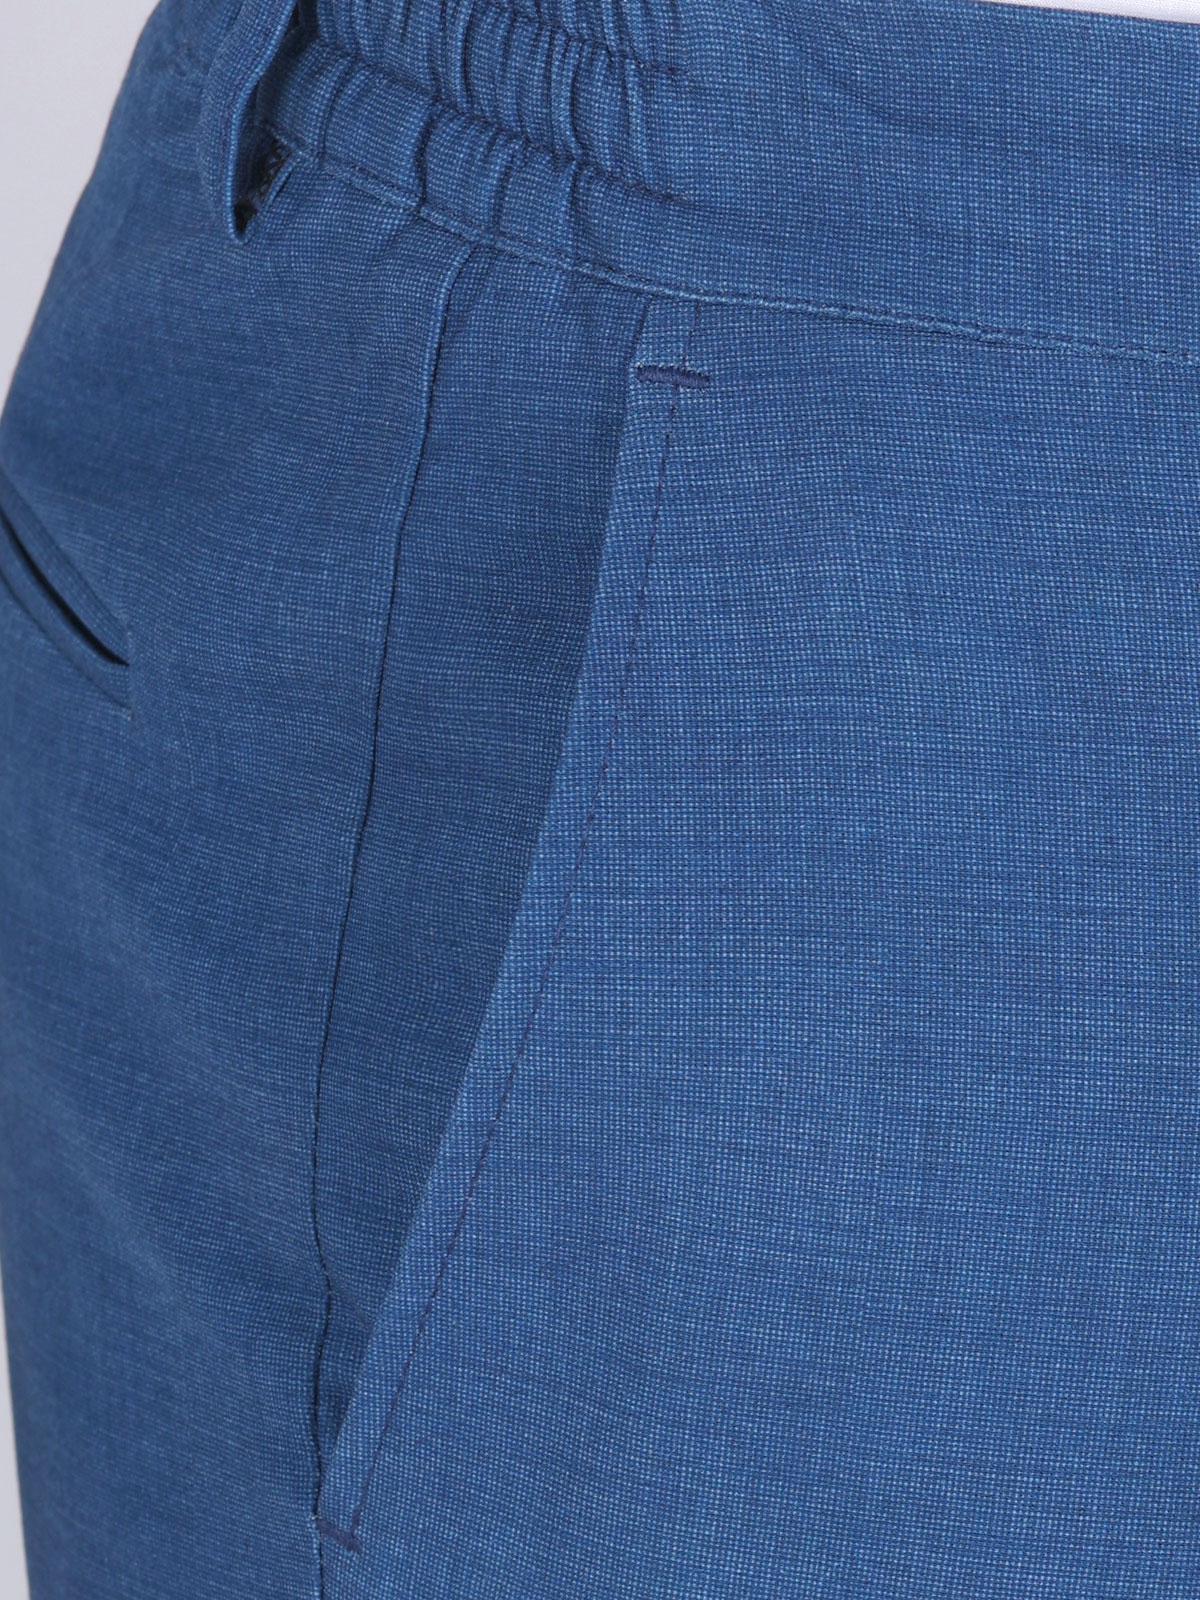 Pantaloni albastri eleganti sport - 60290 € 55.68 img3